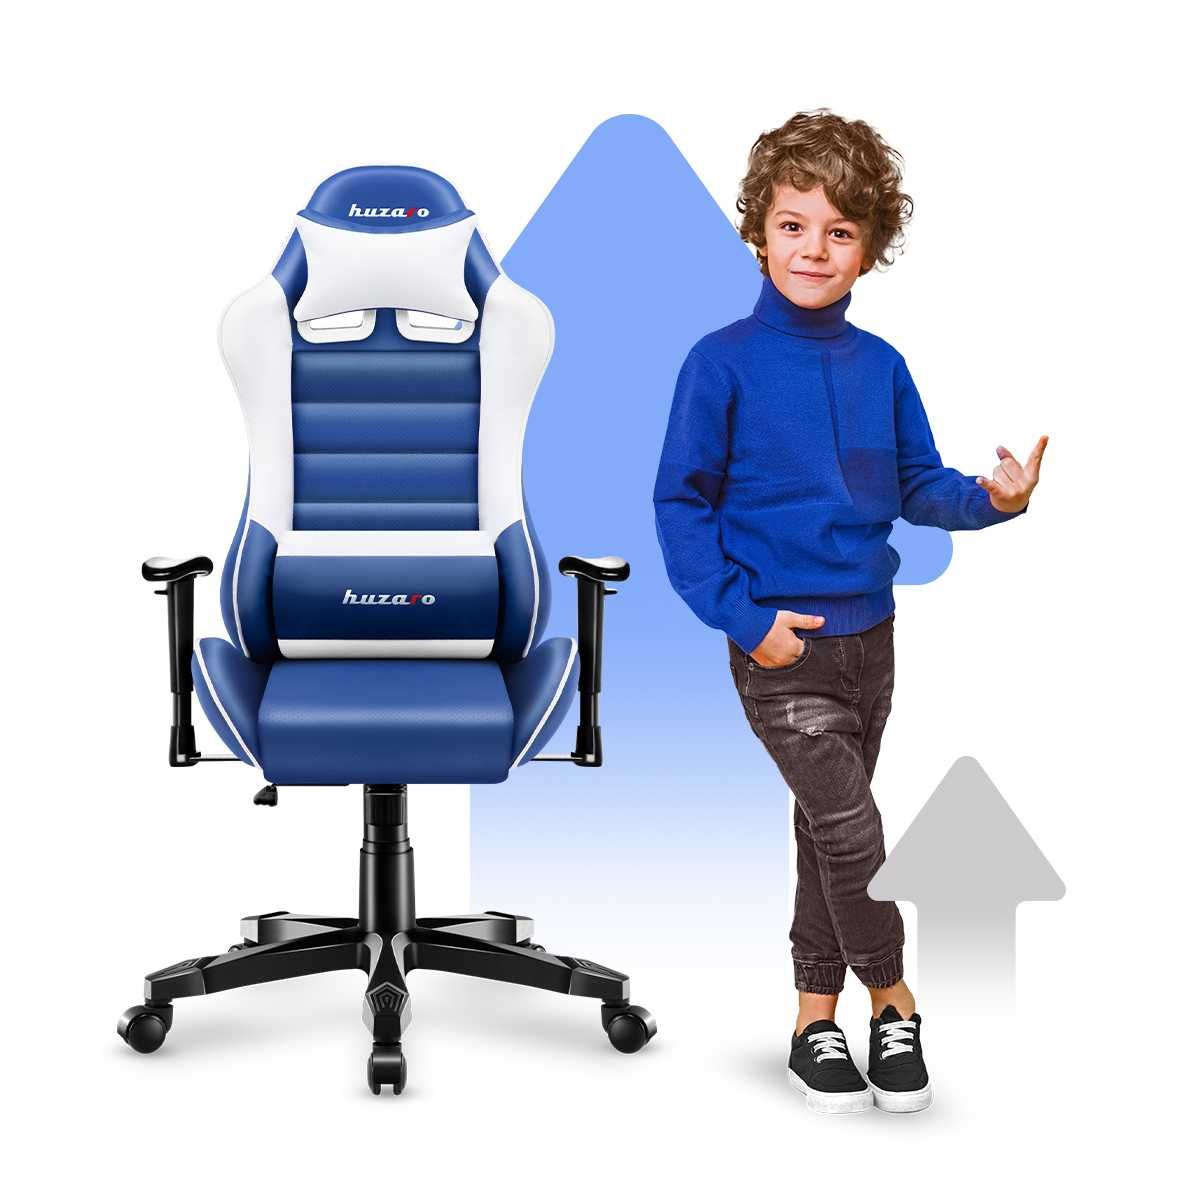 Fotel Gamingowy dla dzieci Ranger 6.0 Blue